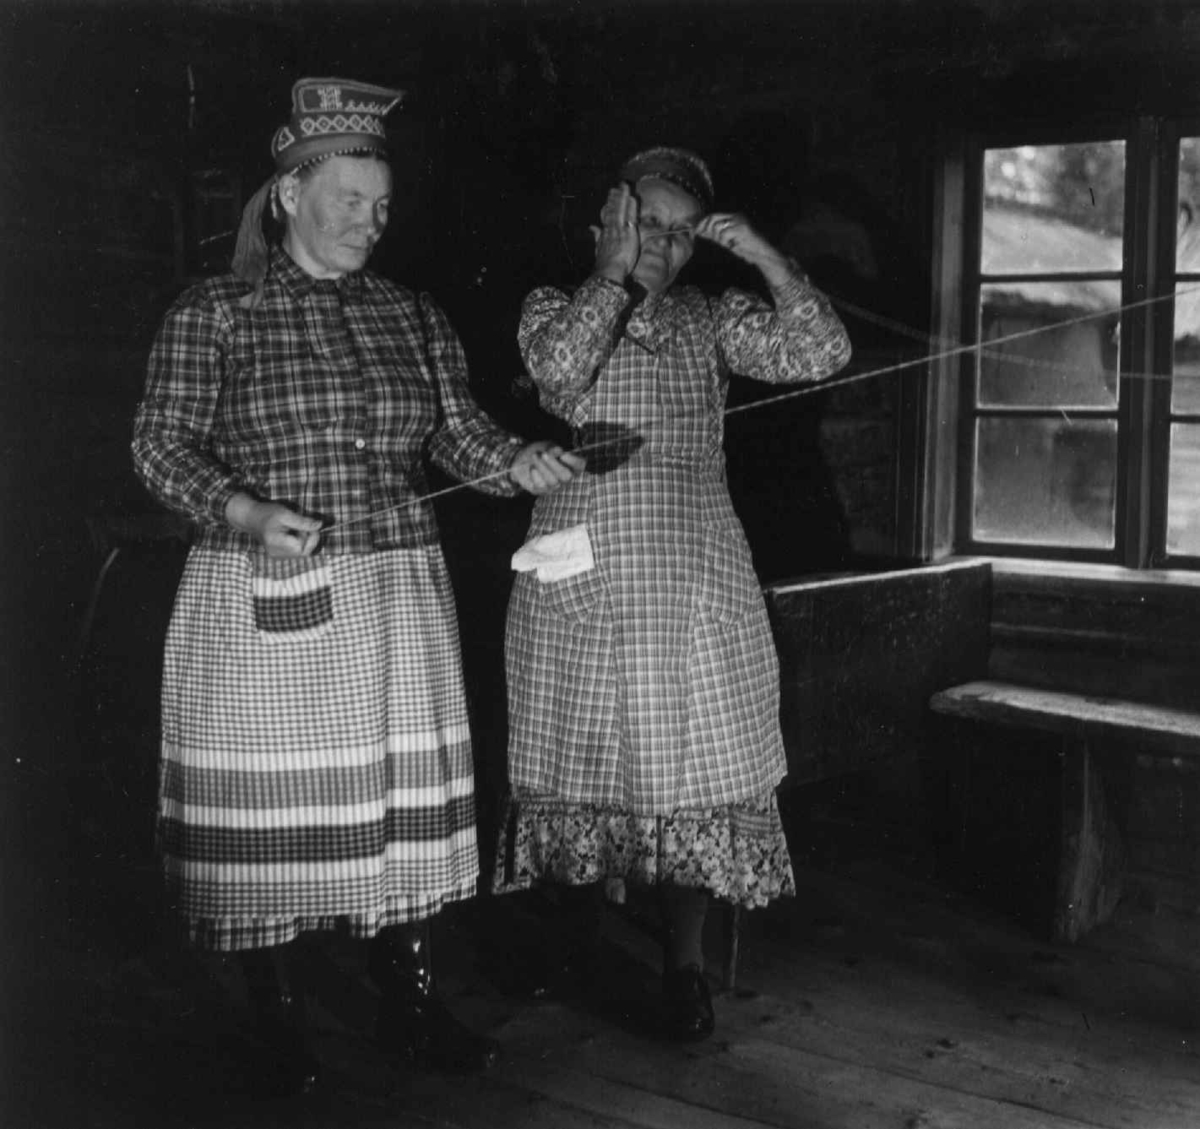 Greneveving. Skoltesamene Darja og Naska Moshnikov demonstrerer grenveveing på Föllisöen, Helsinki Universitet, Finland 1955. 14. De tvinner jaretrådene.